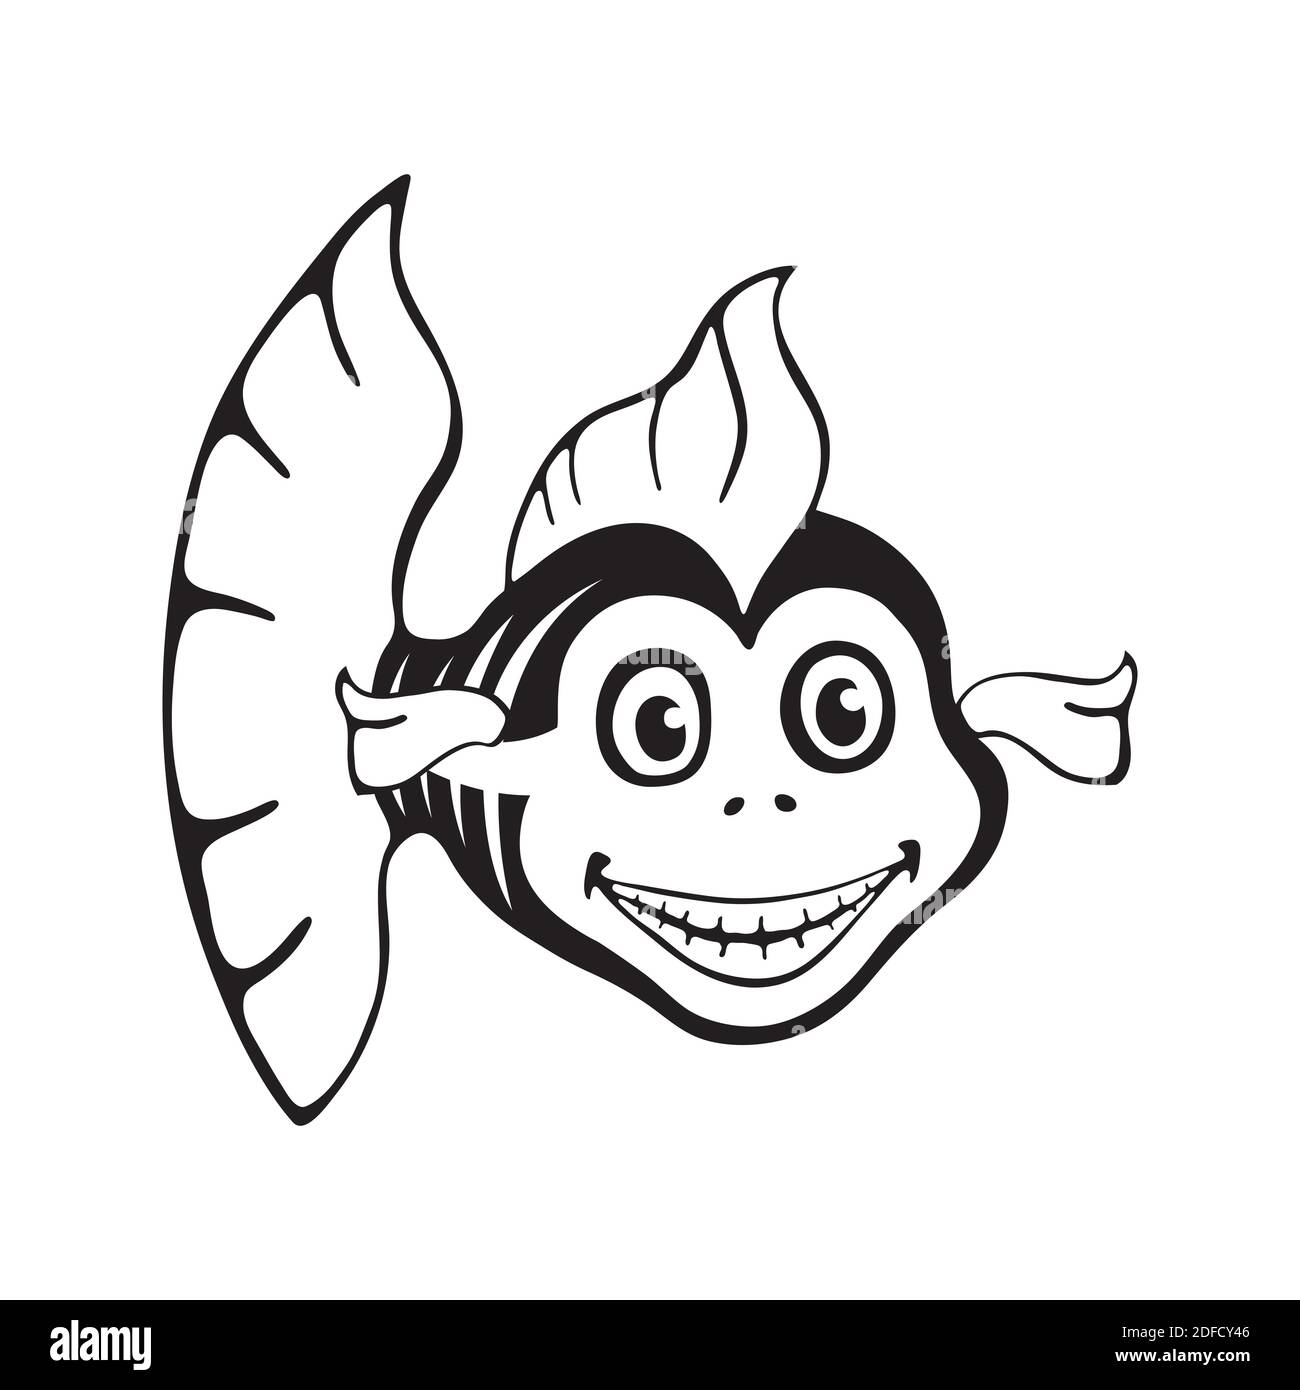 Lindo esqueleto de pescado. Plantilla de Halloween para imprimir, patrón  Imagen Vector de stock - Alamy